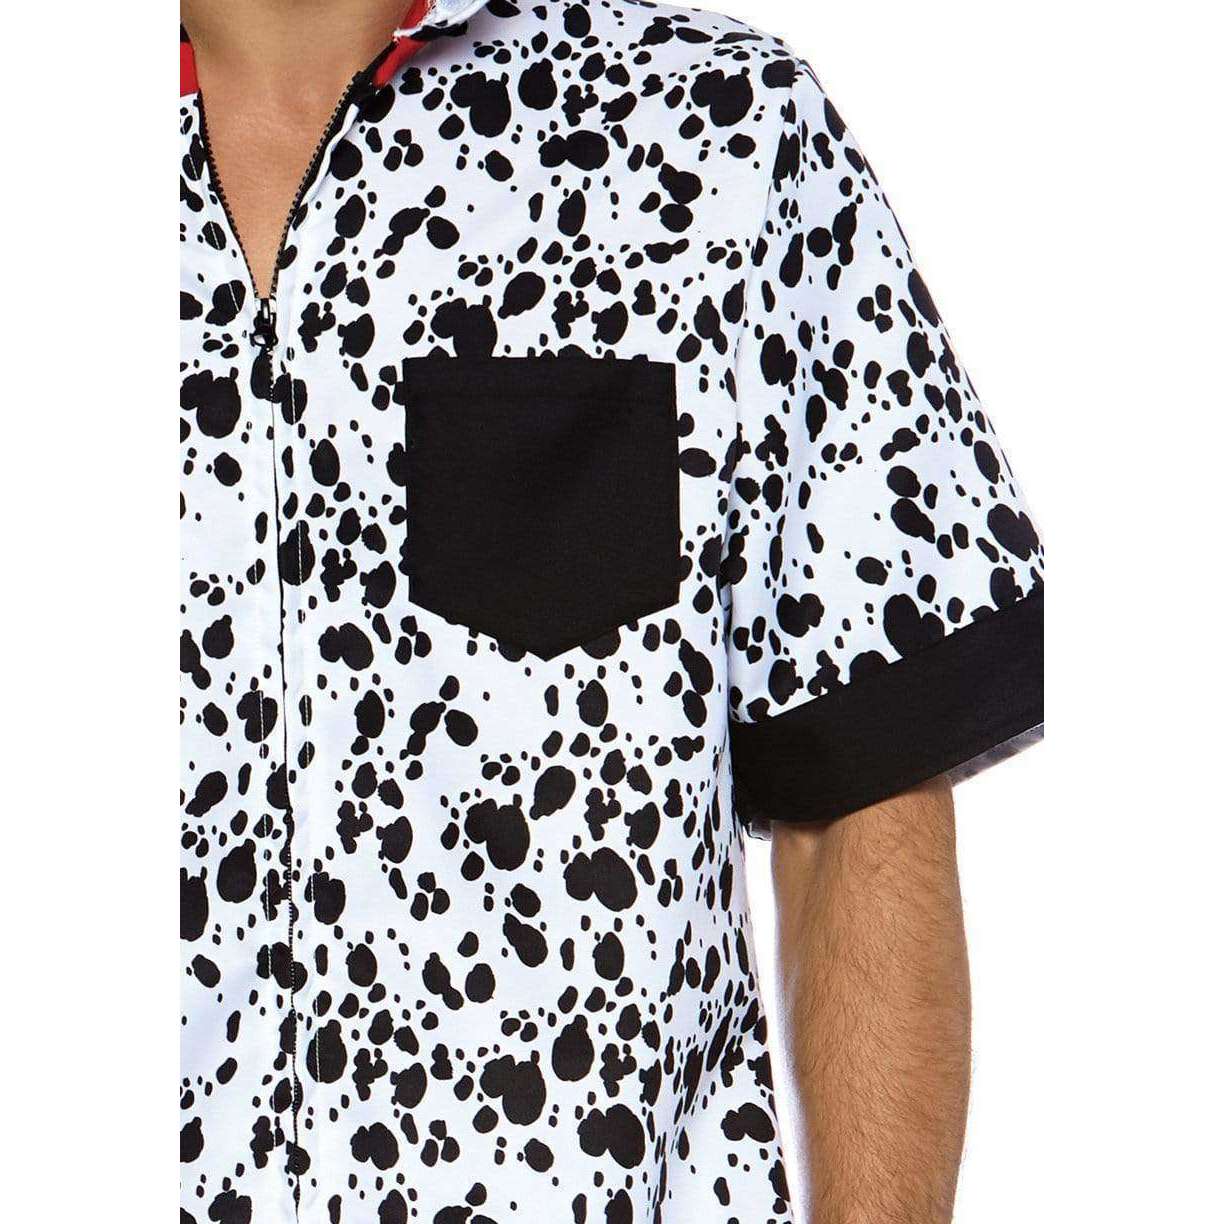 Dalmatian Dog Adult Costume